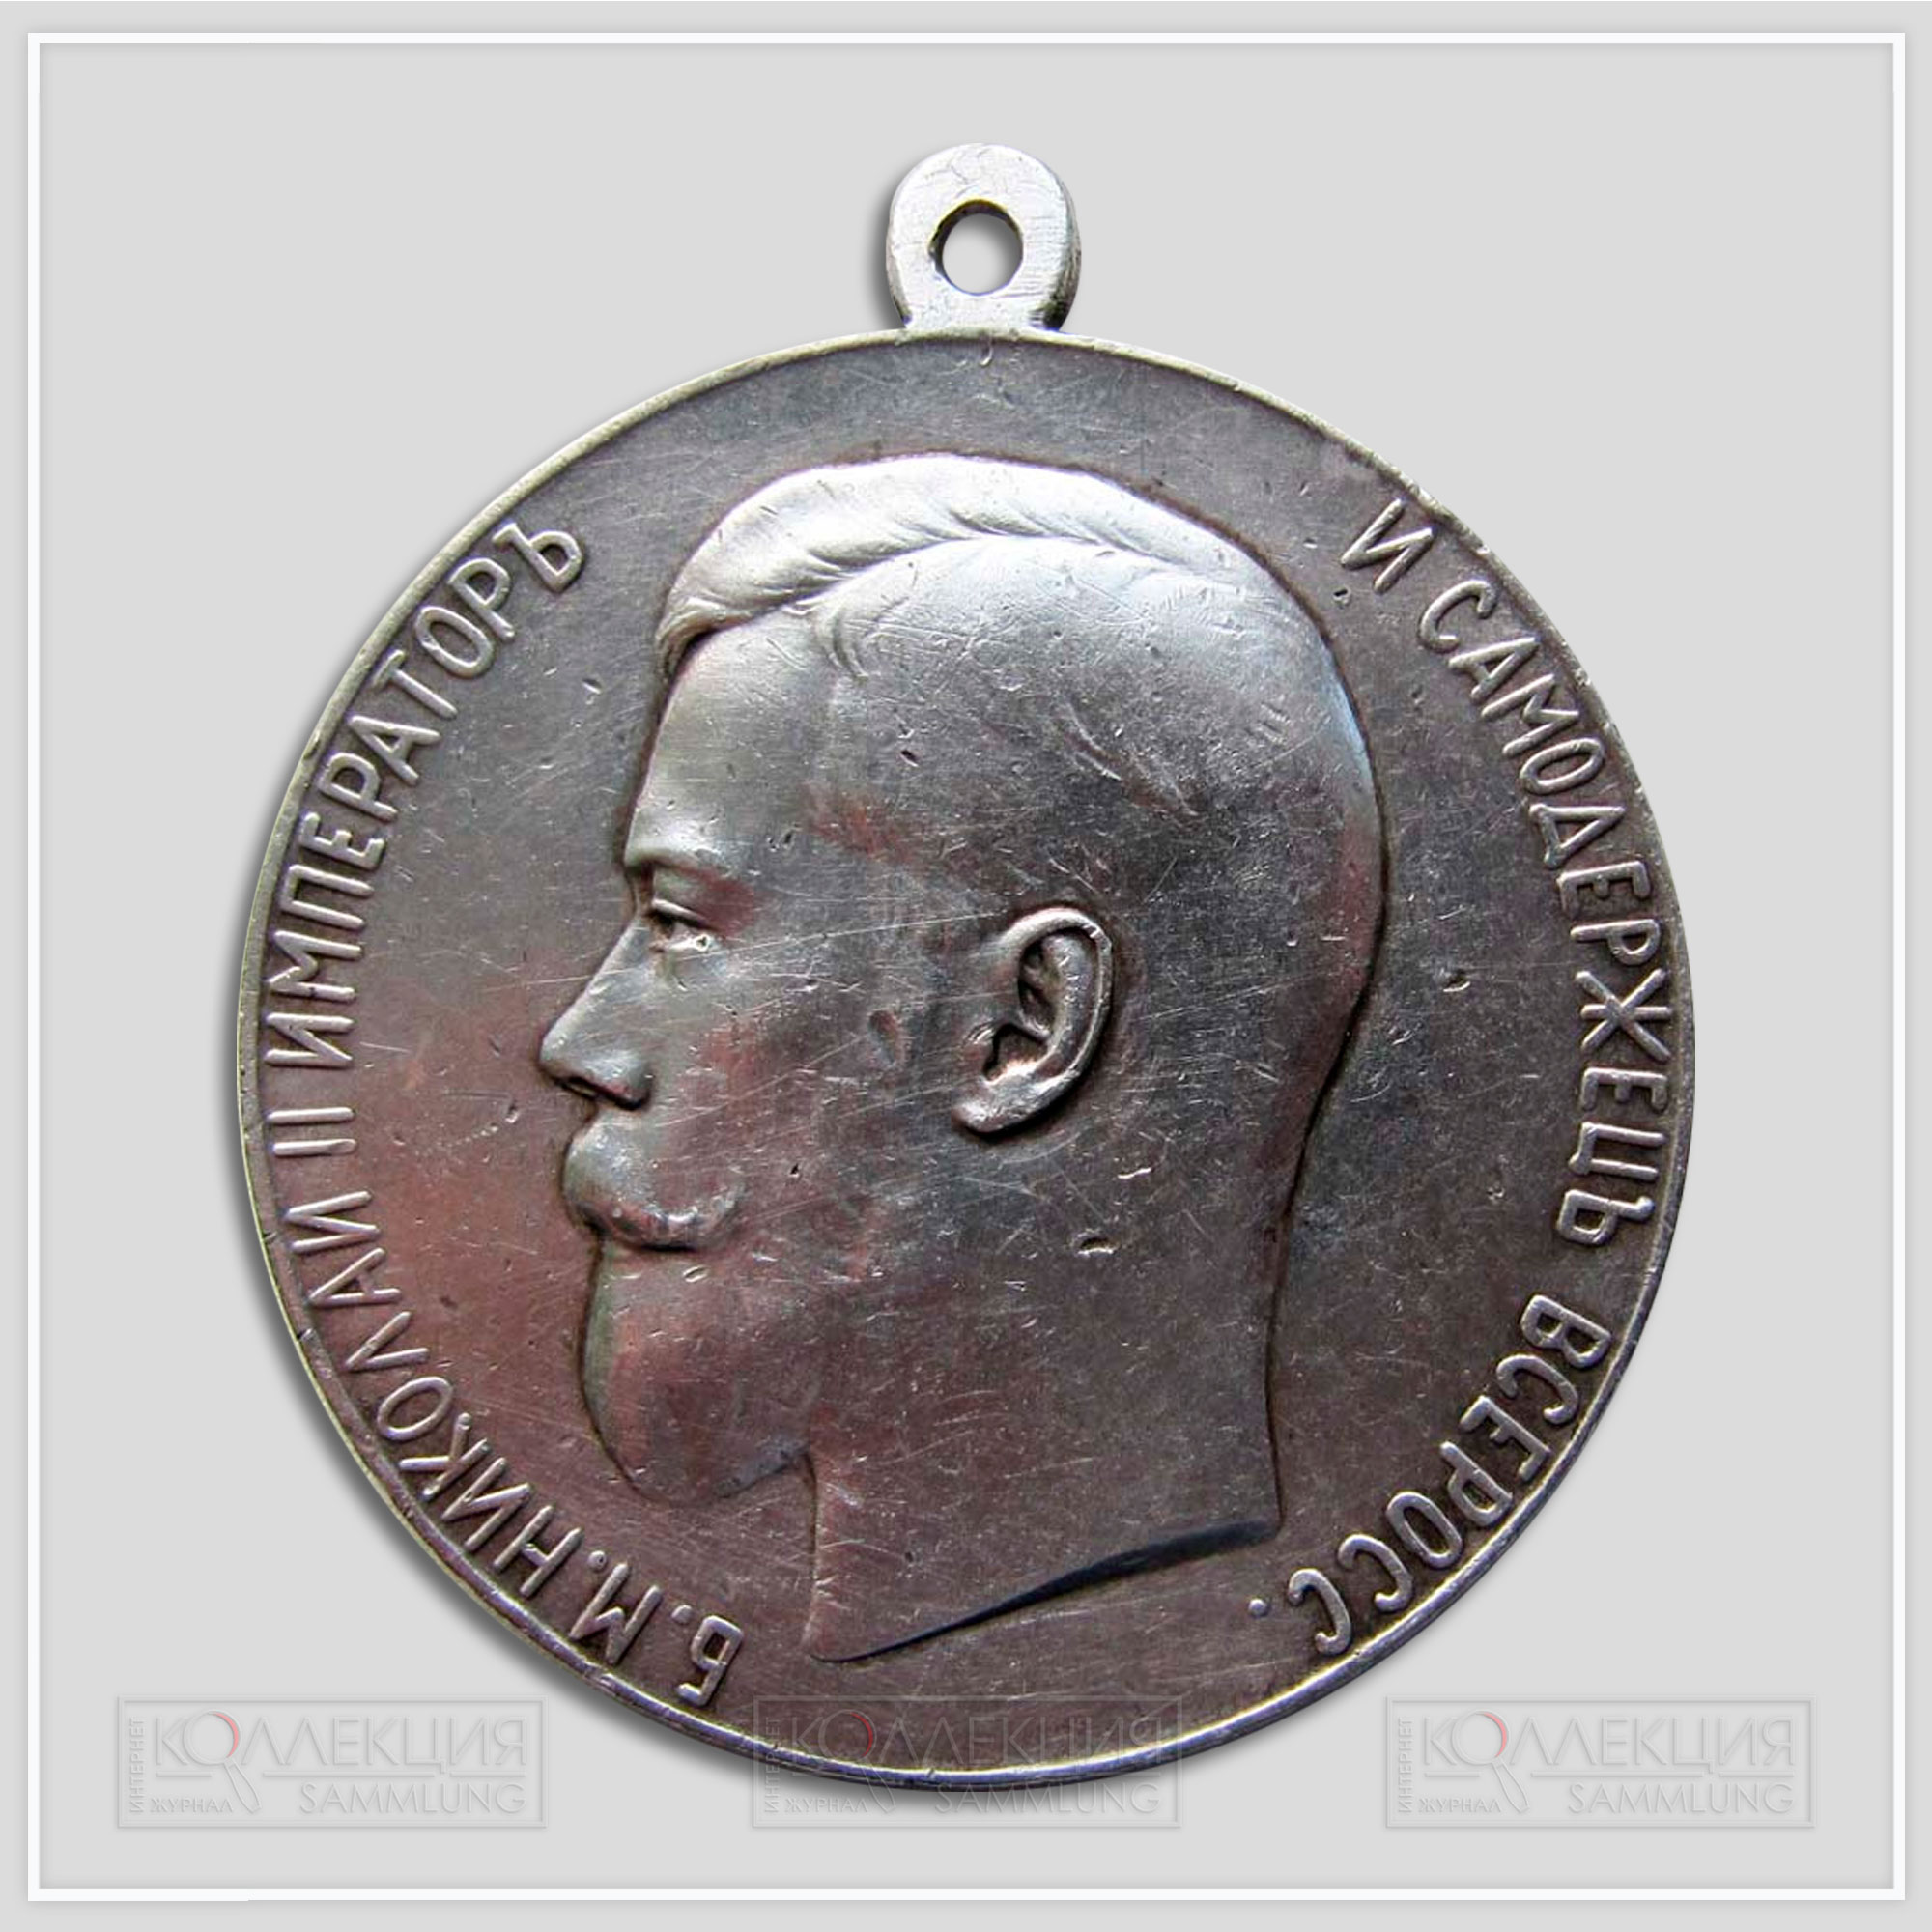 Медаль "За усердие" Николай II Серебро Диаметр 51,4 мм Вес 58,0 г Из архива Фалеристика.инфо Разместил коллега Сибирякъ